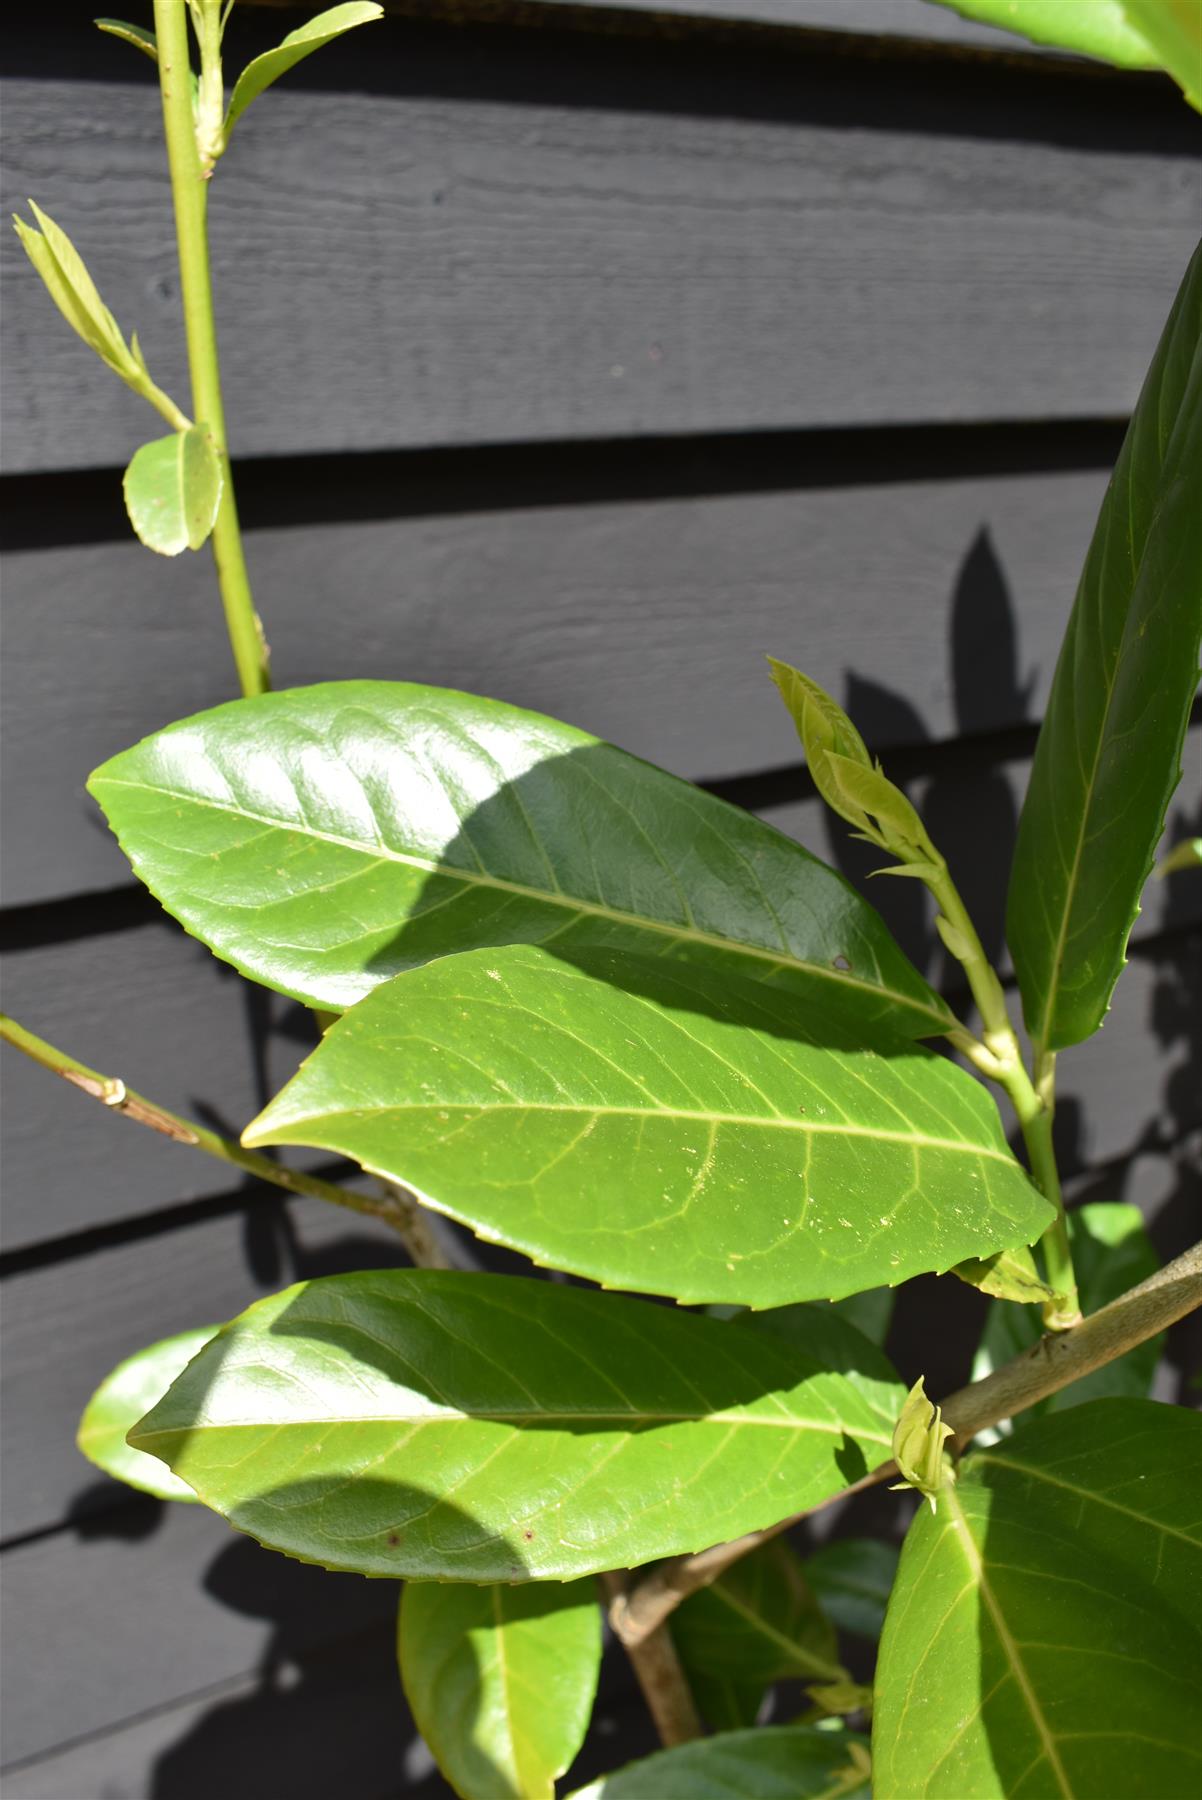 Cherry Laurel Hedging | Prunus laurocerasus Rotundifolia  - Pot Grown - 150-170cm - 20lt